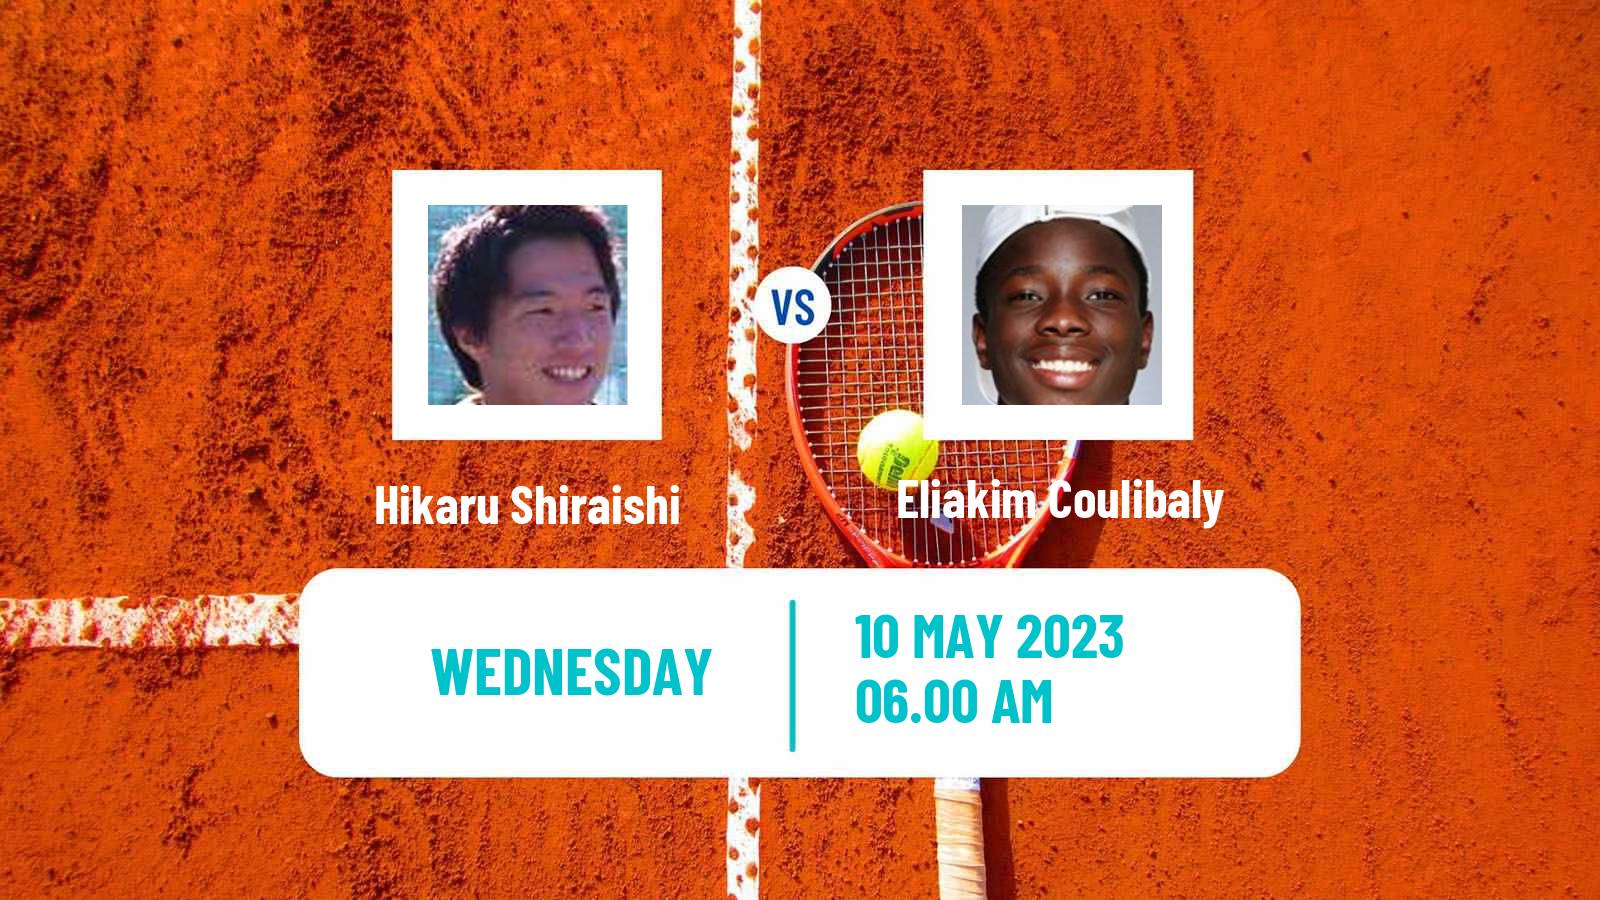 Tennis ITF Tournaments Hikaru Shiraishi - Eliakim Coulibaly